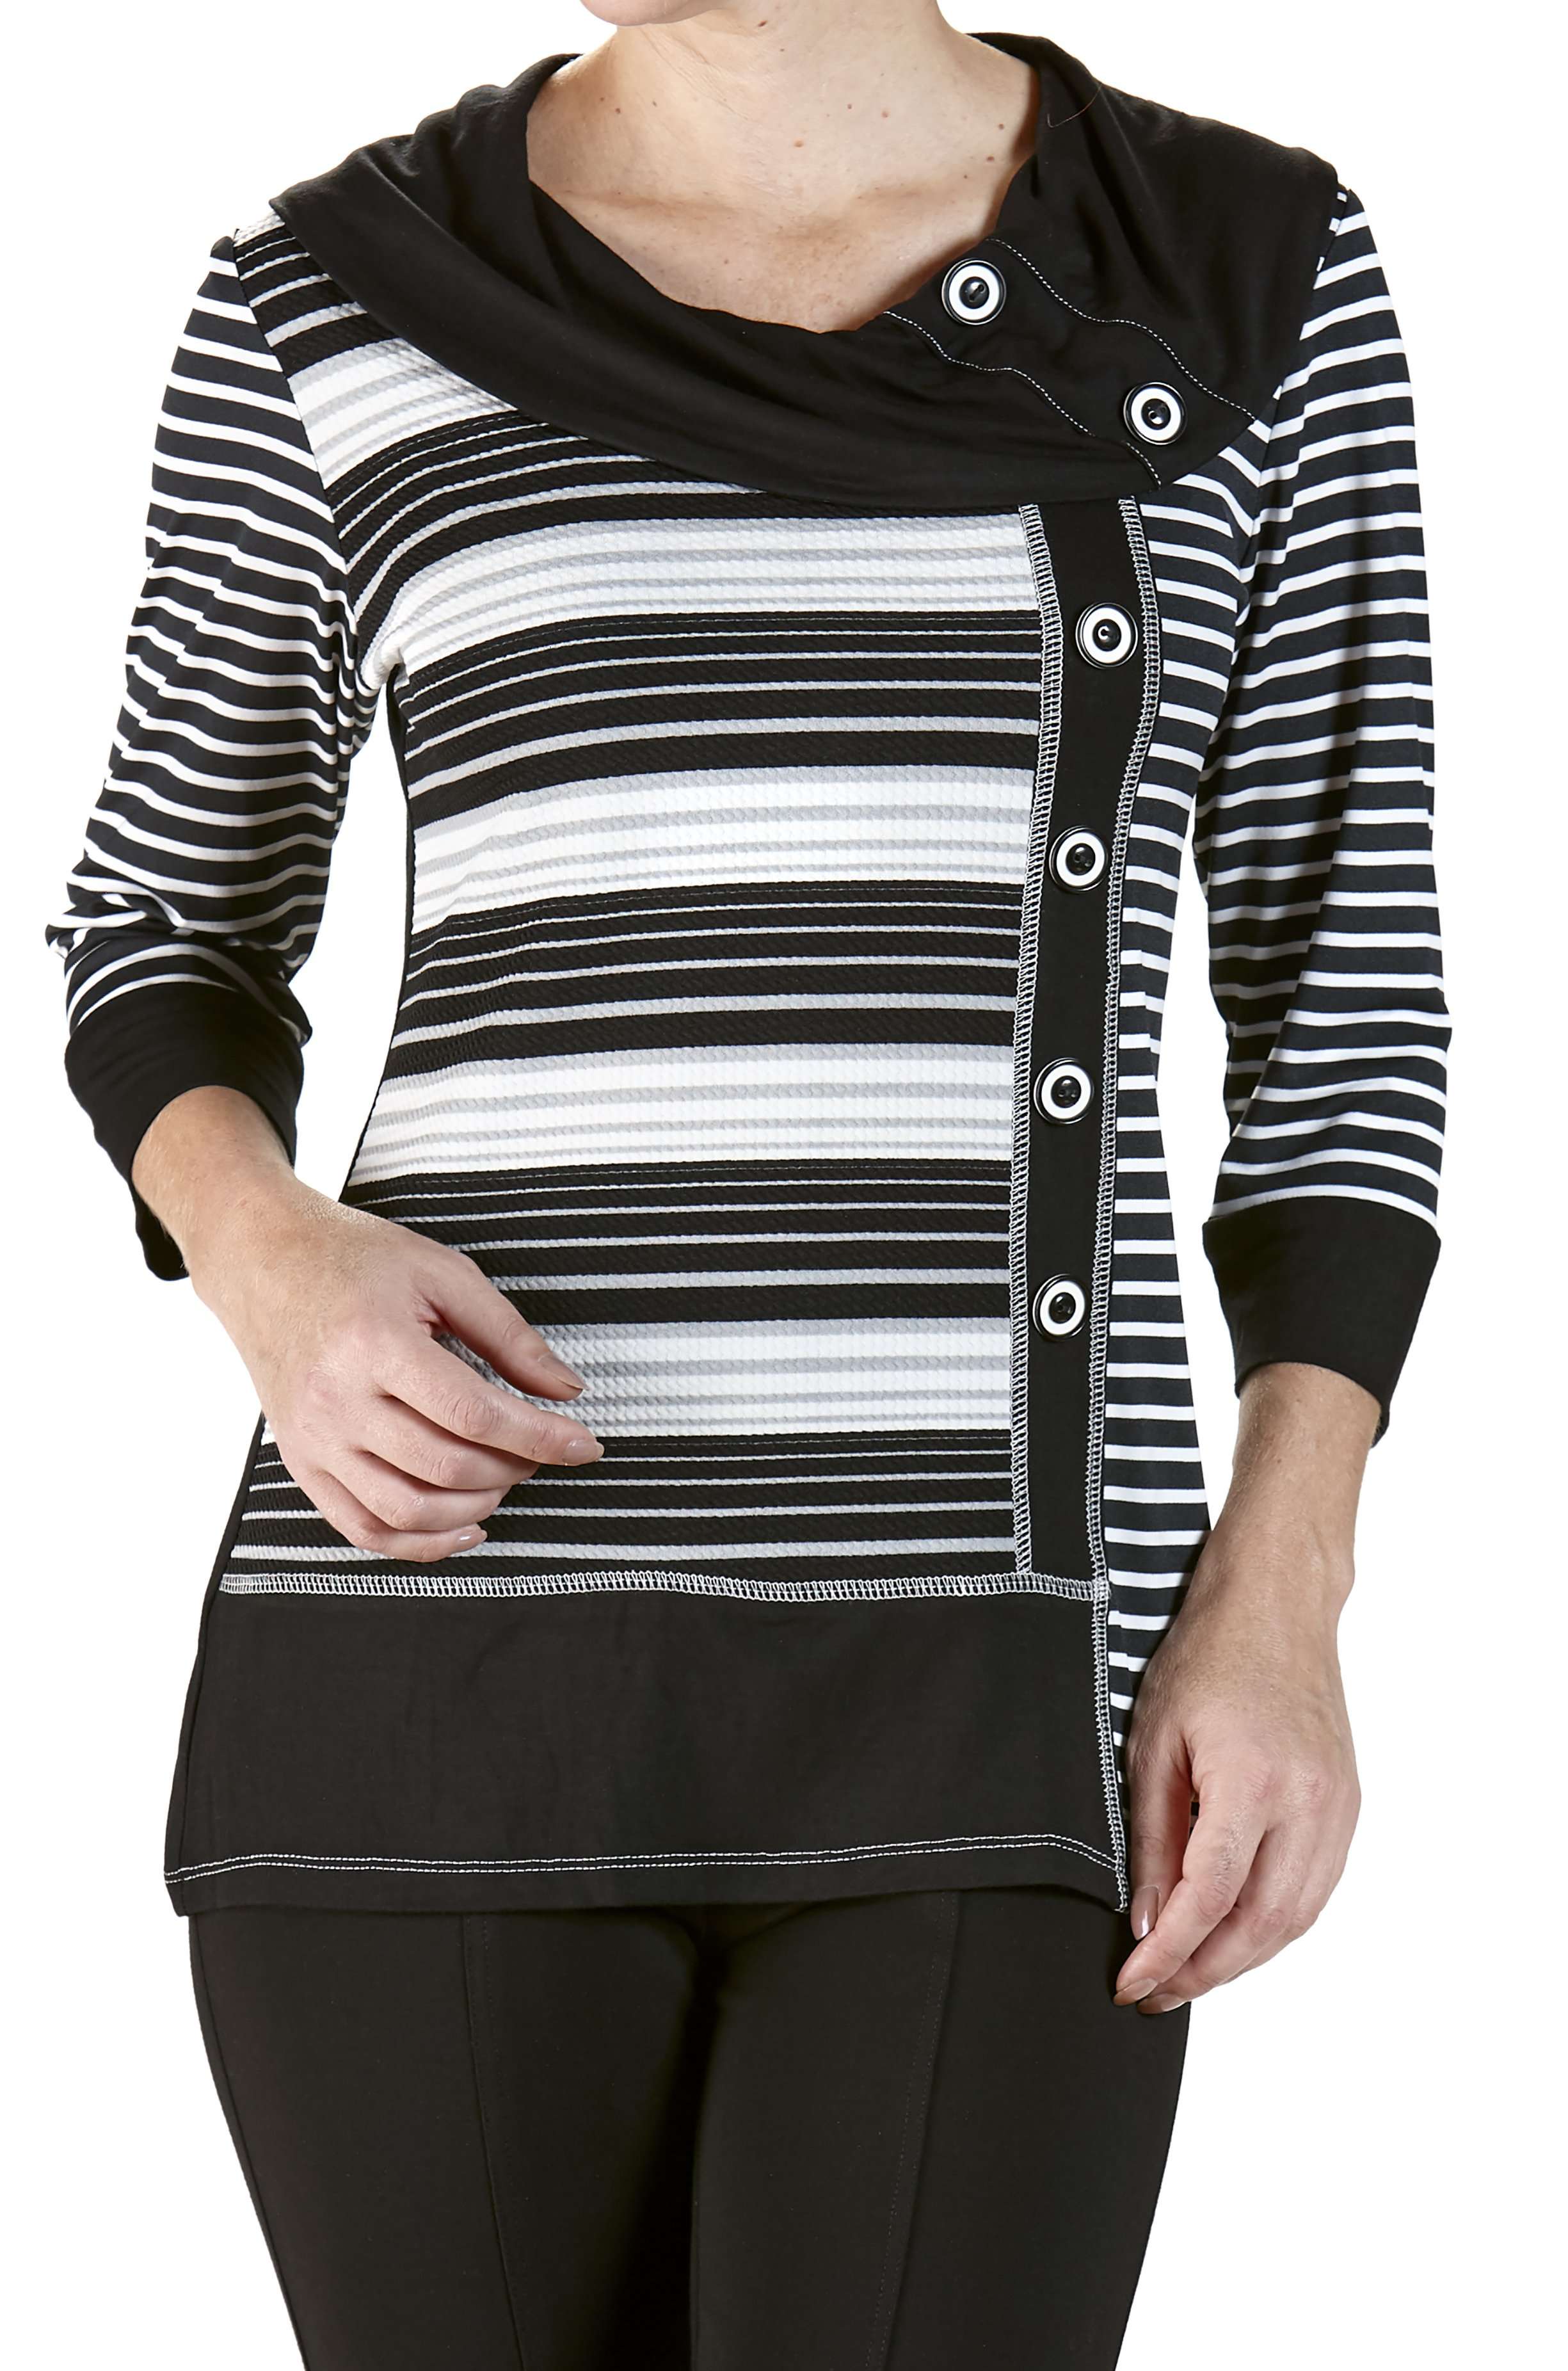 Women's Sweater Top Black Stripe Soft Knit Fabric - XXLarge Sizes - Made in Canada - Yvonne Marie - Yvonne Marie